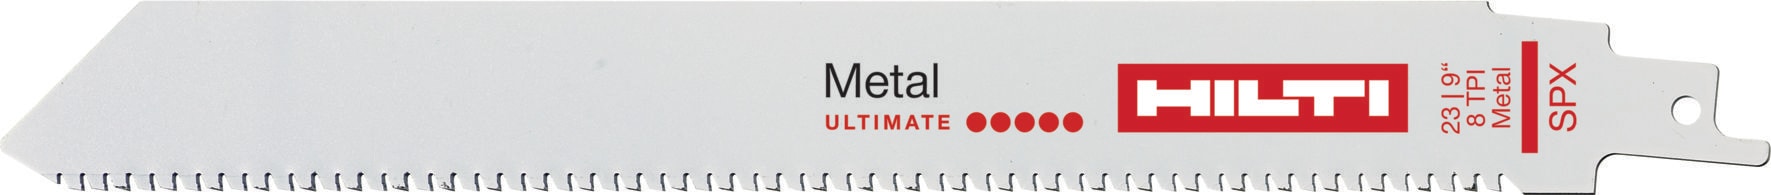 Metalle für Deutschland (Hartmetall) Säbelsägeblatt Sägeblätter - dicke - Hilti